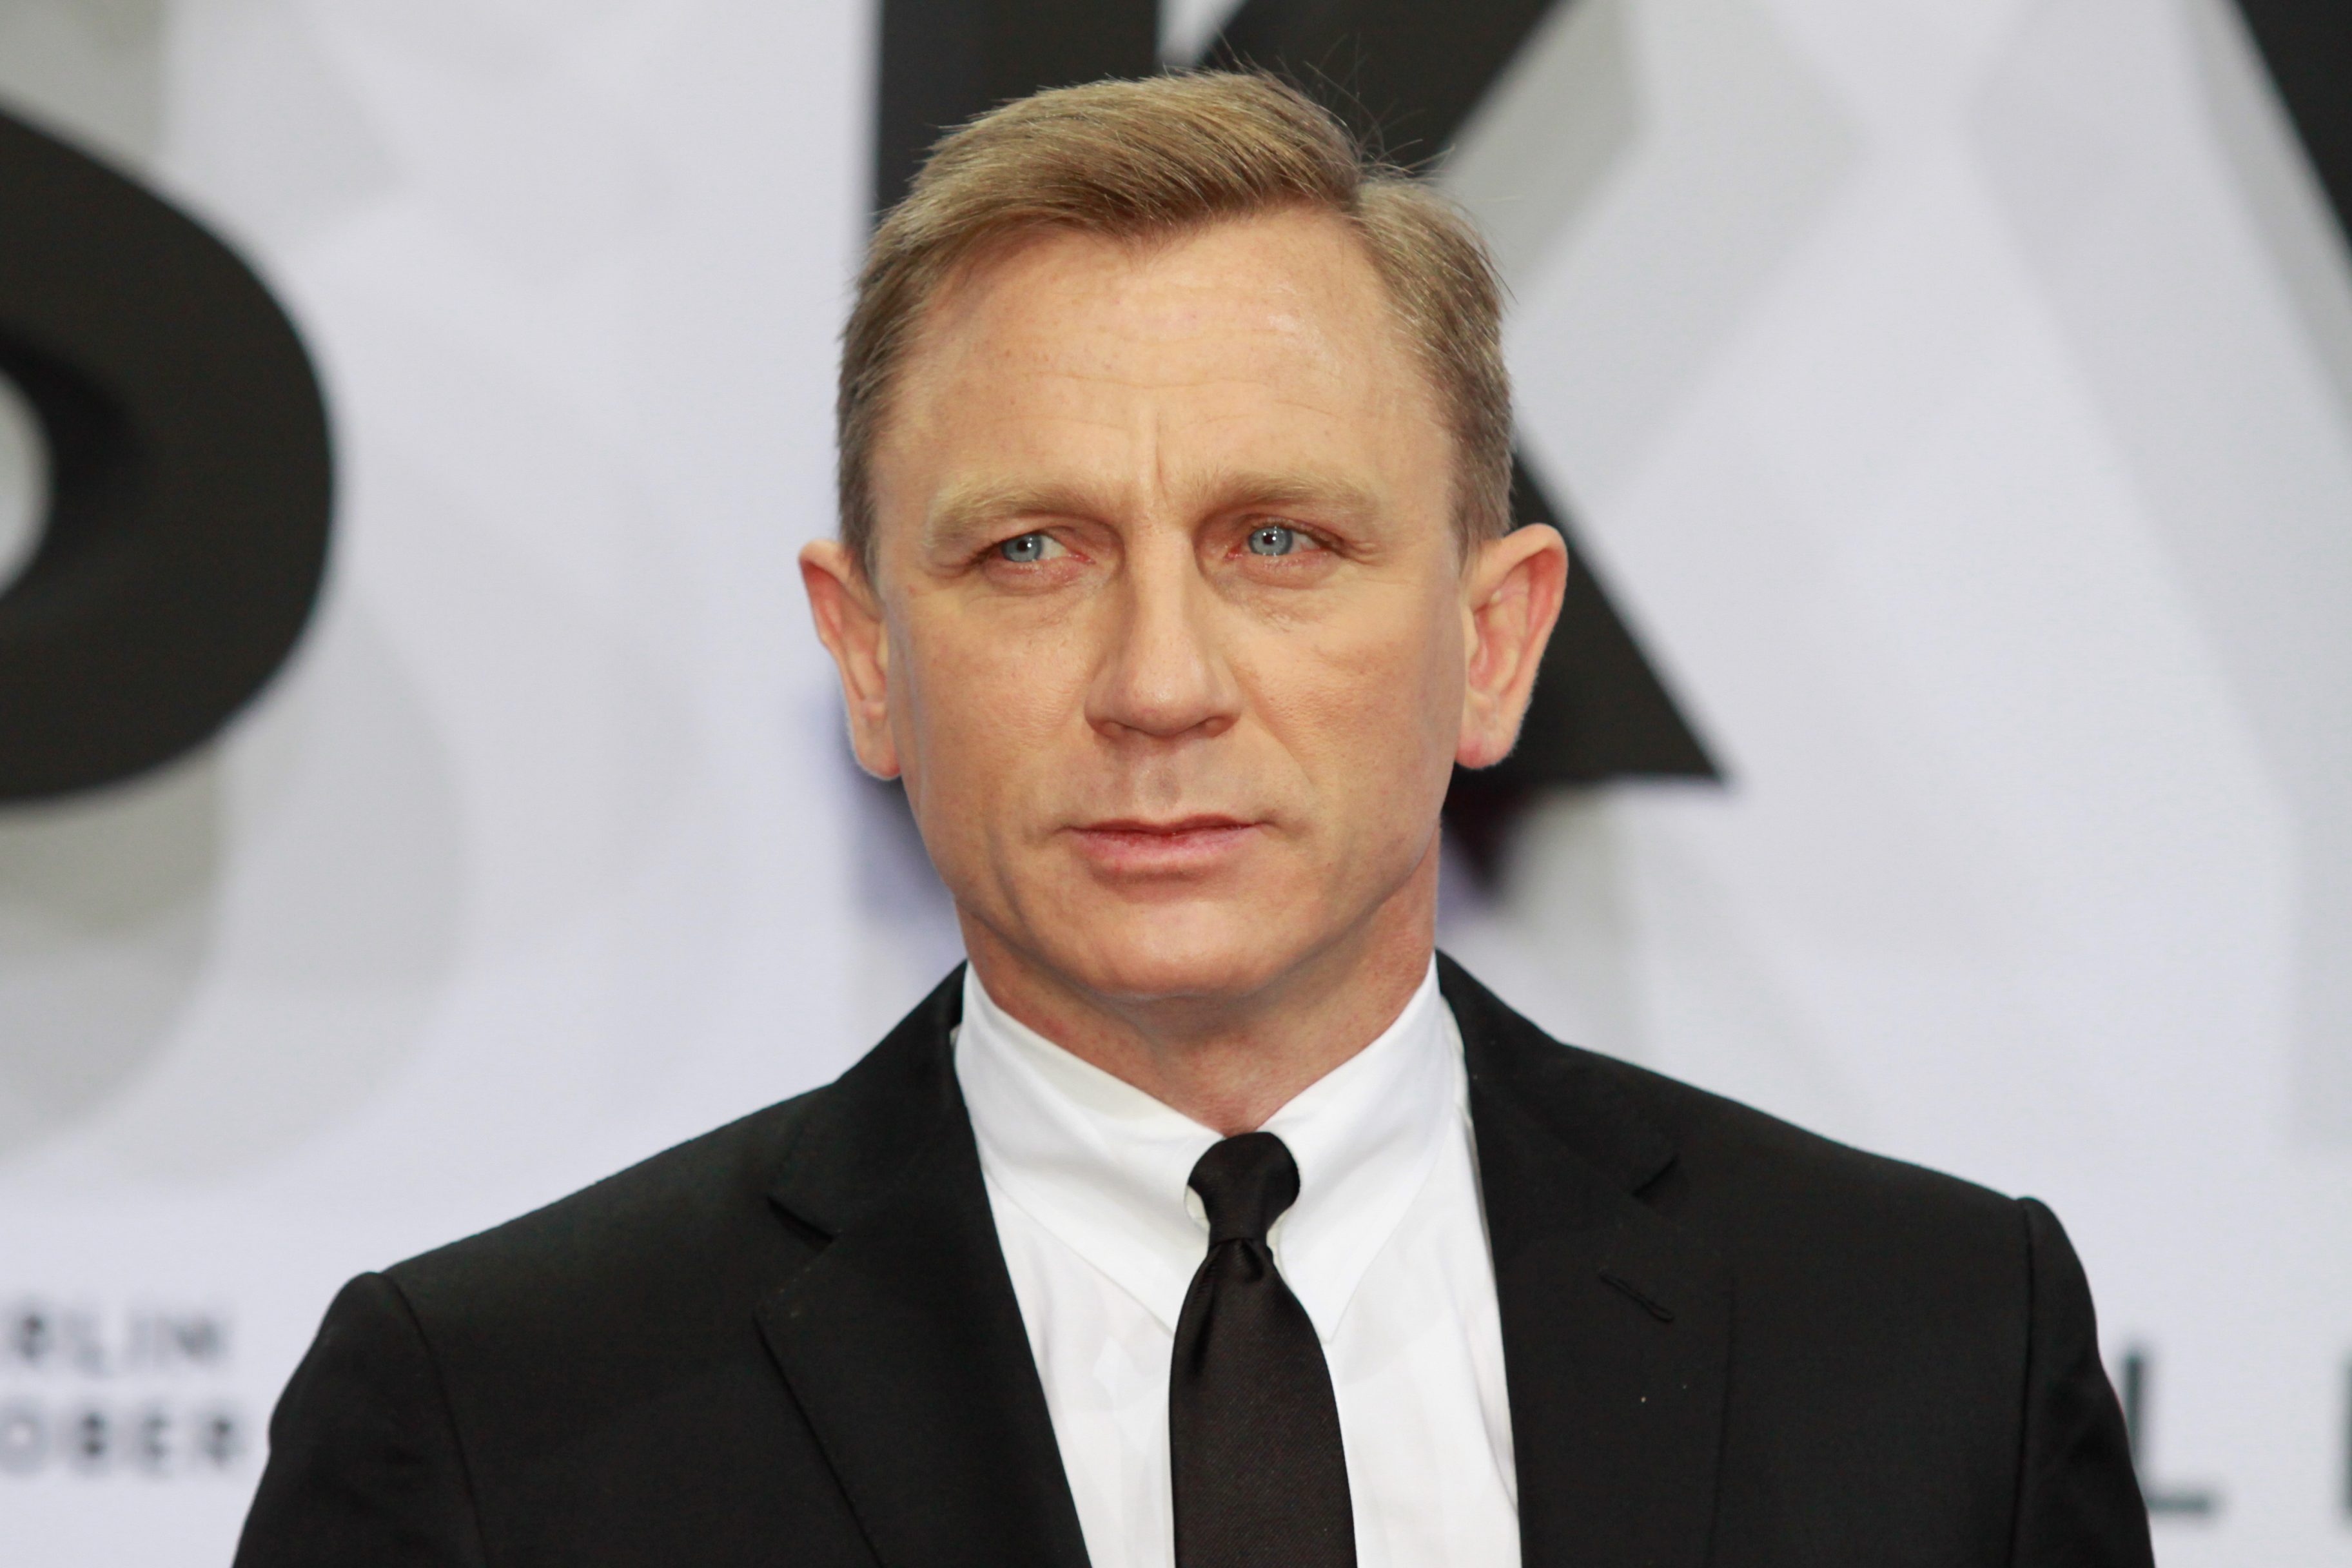 Who is Daniel Craig